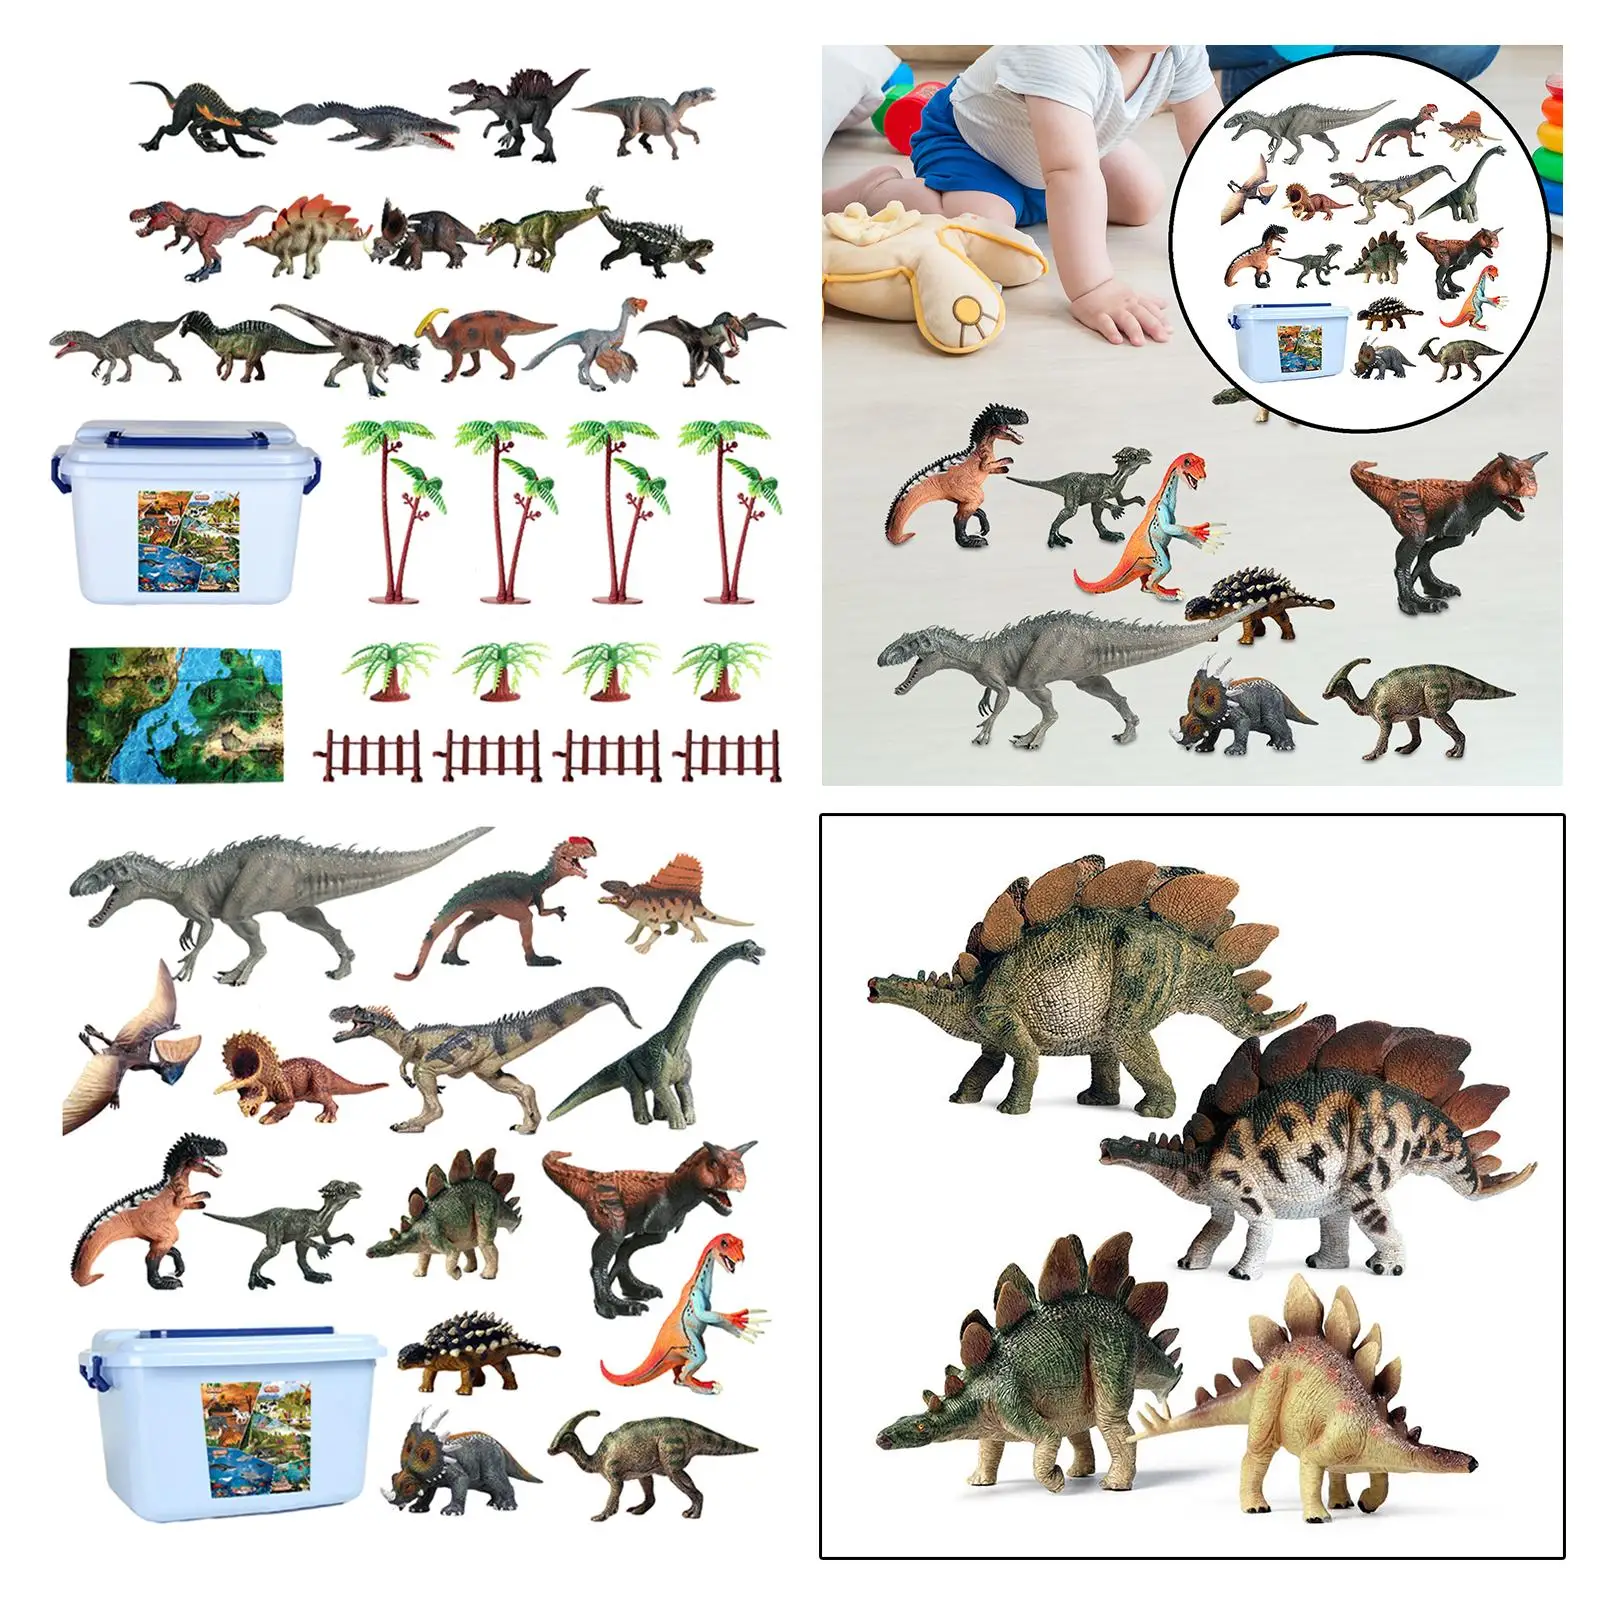 15x Kids Dinosaur Toys Wildlife Animal Figurine for Party Favors Christmas